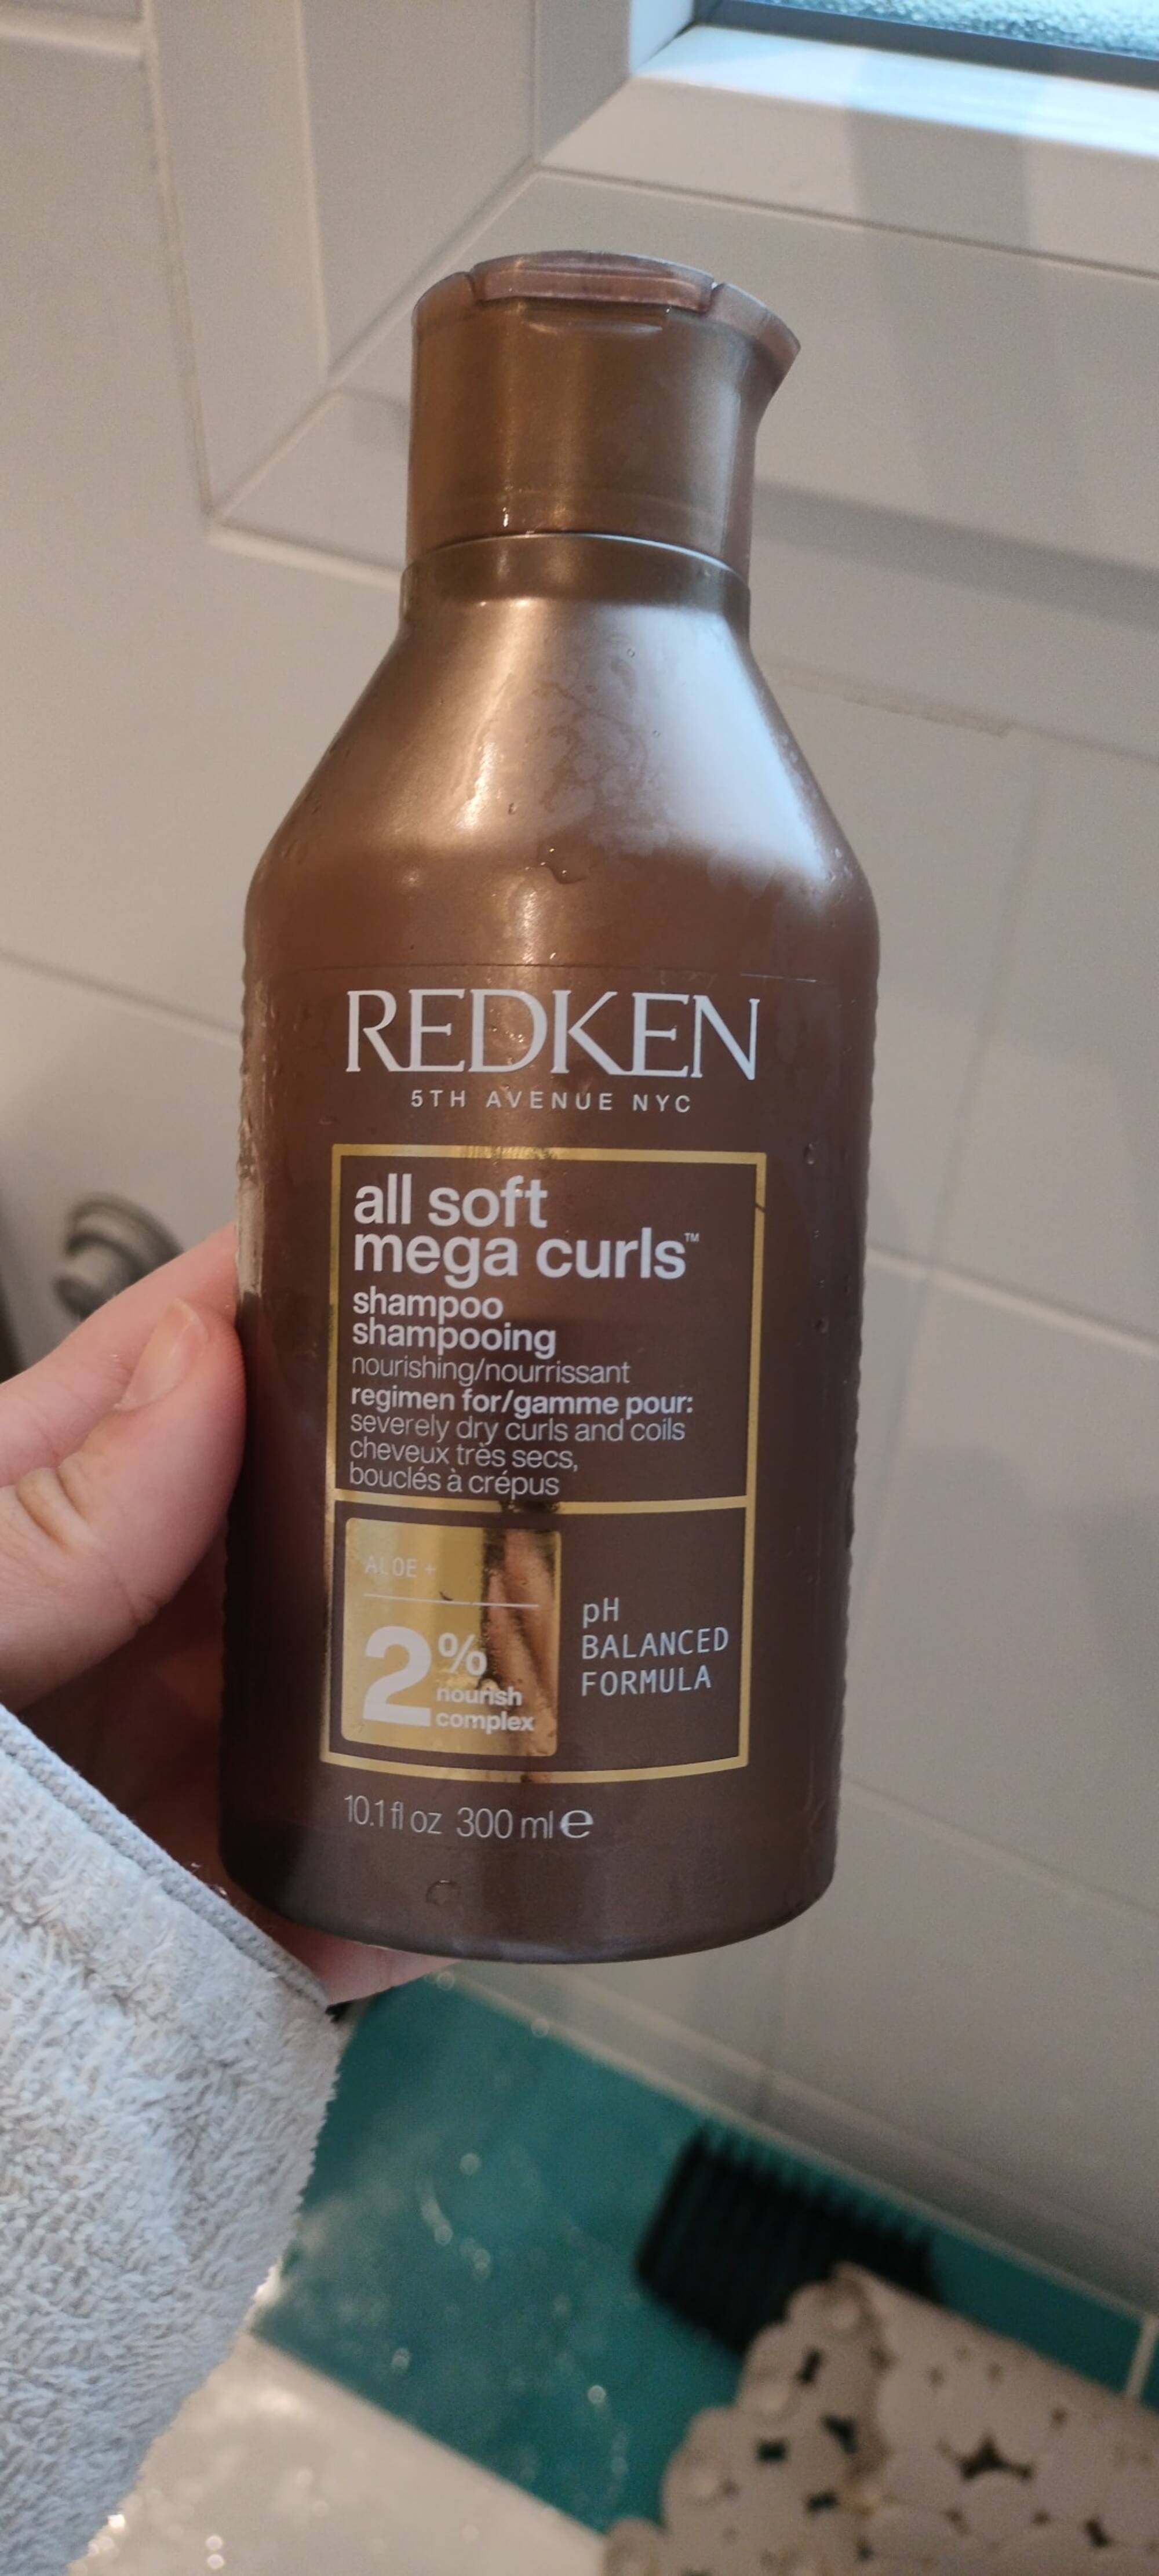 REDKEN - All soft mega curls - Shampooing